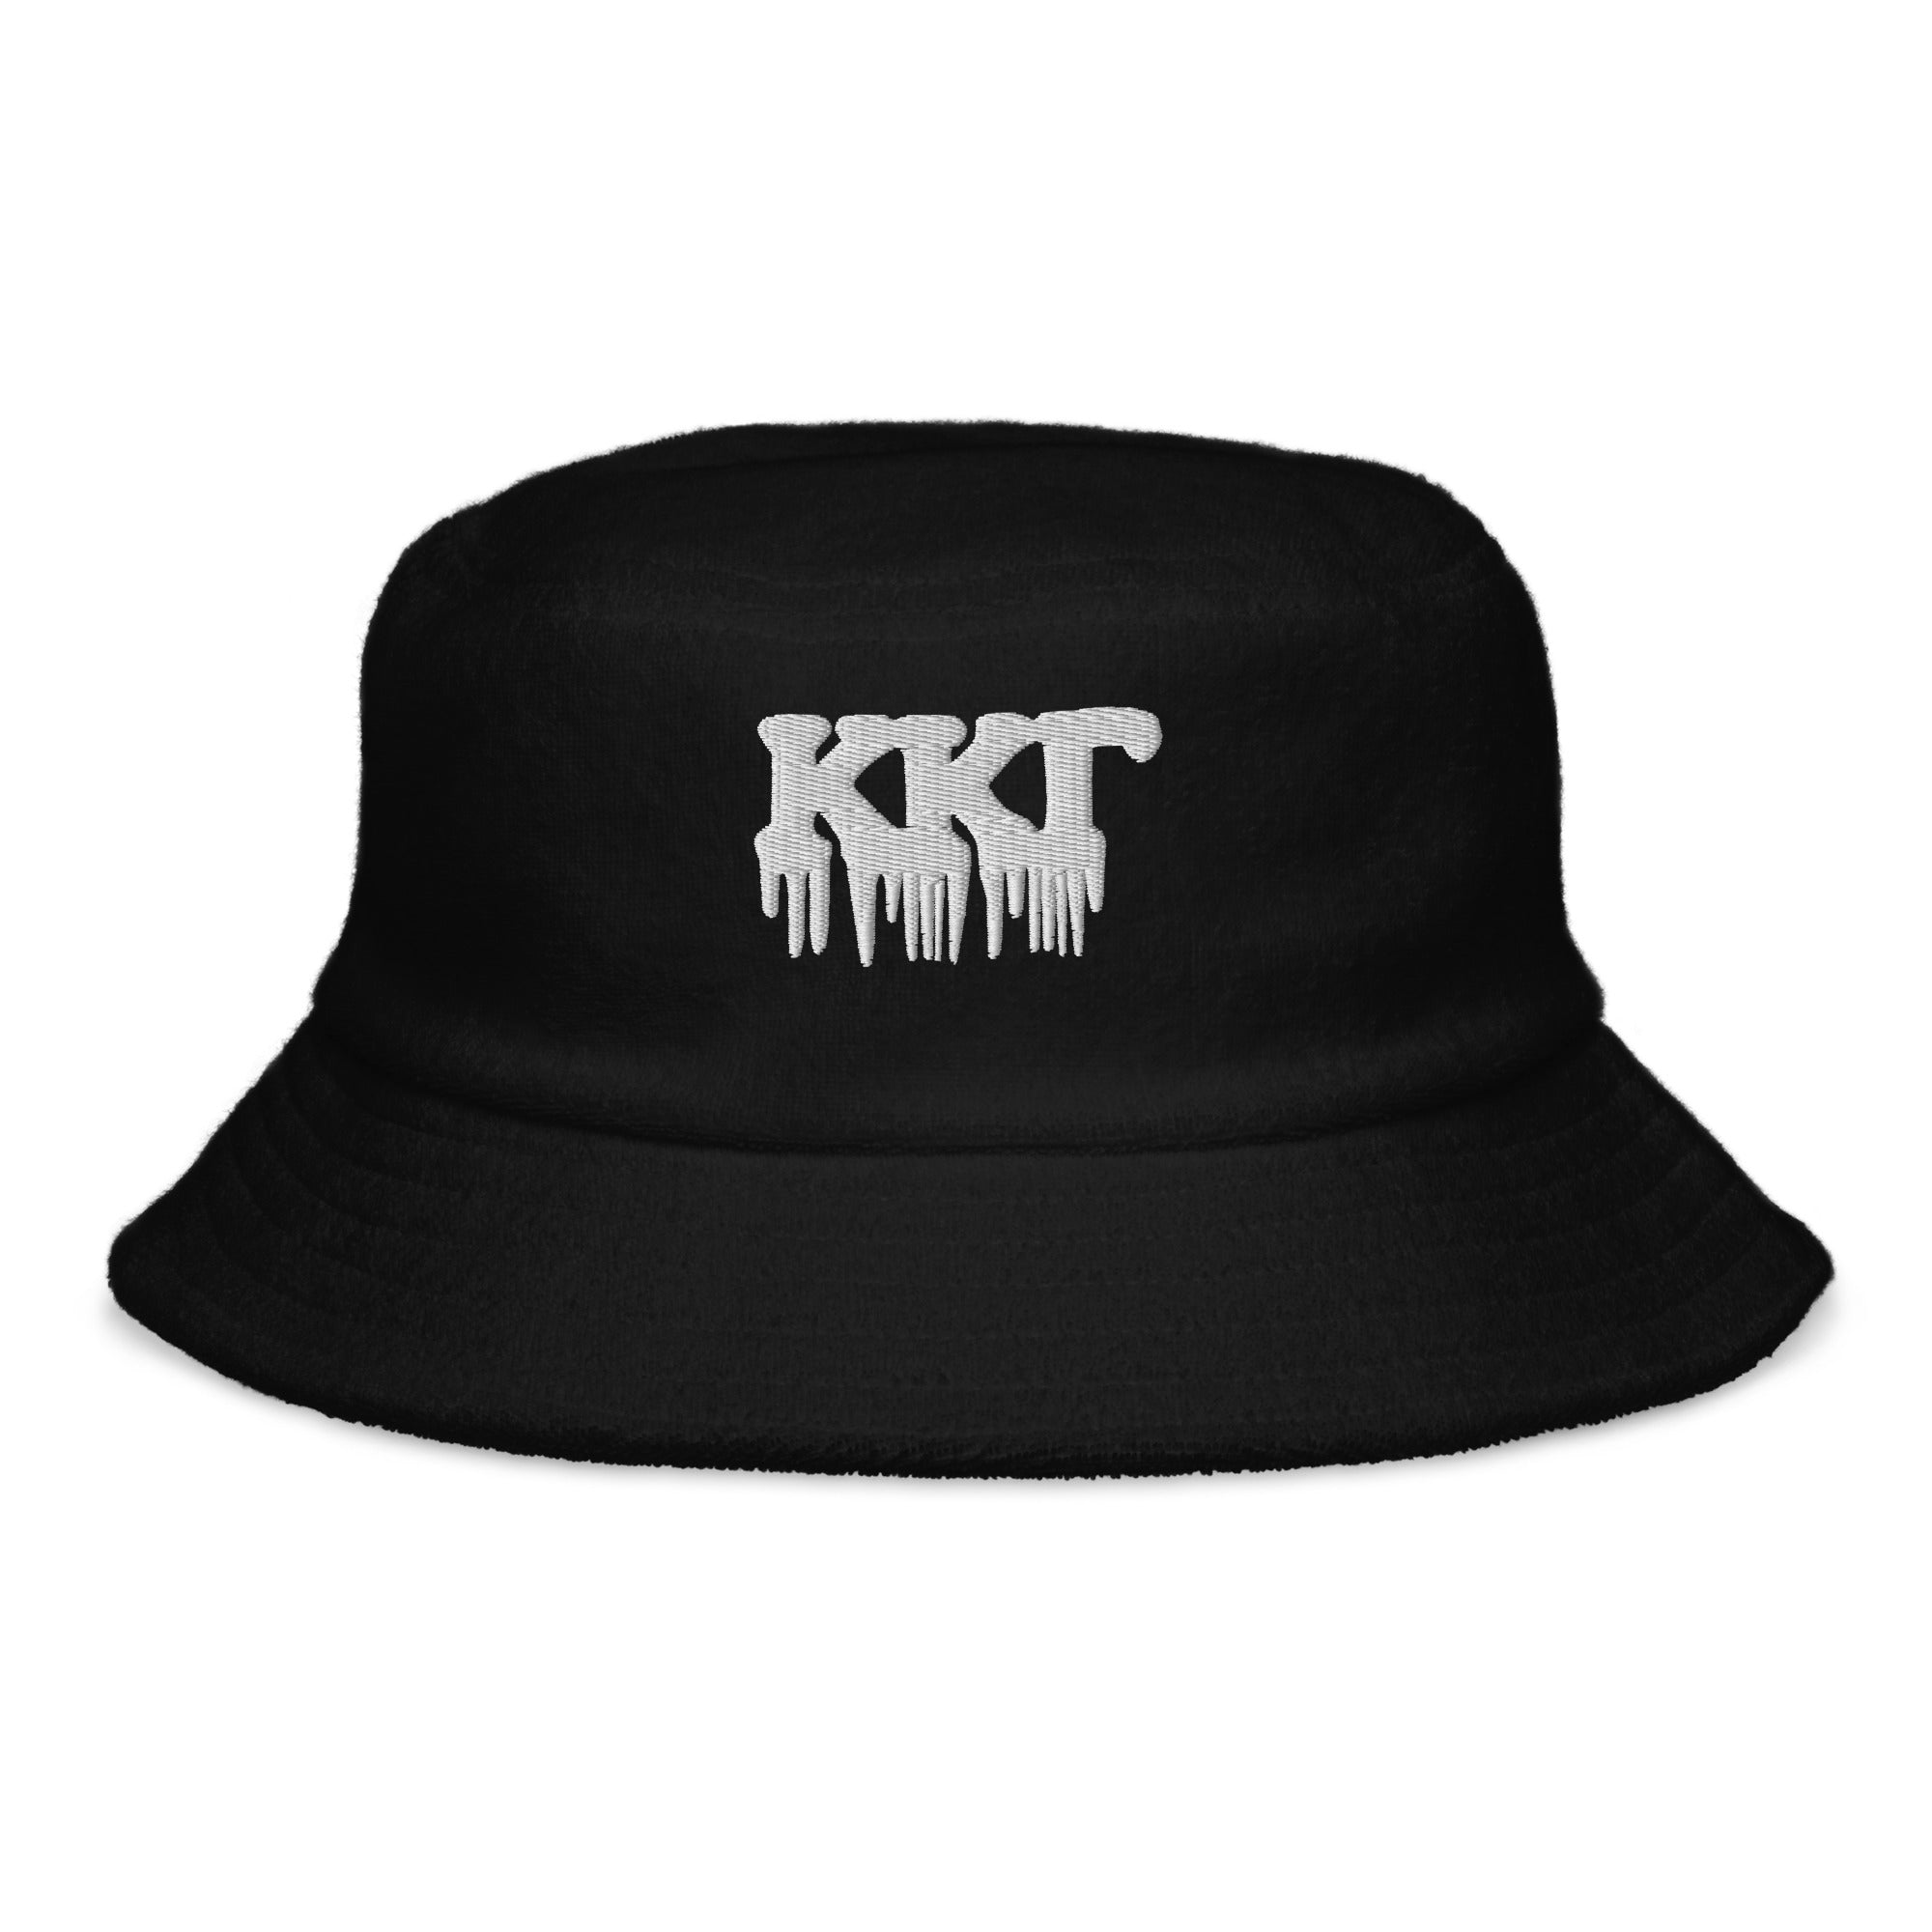 Kappa Authentic Stals Bucket Hat in Black Jet